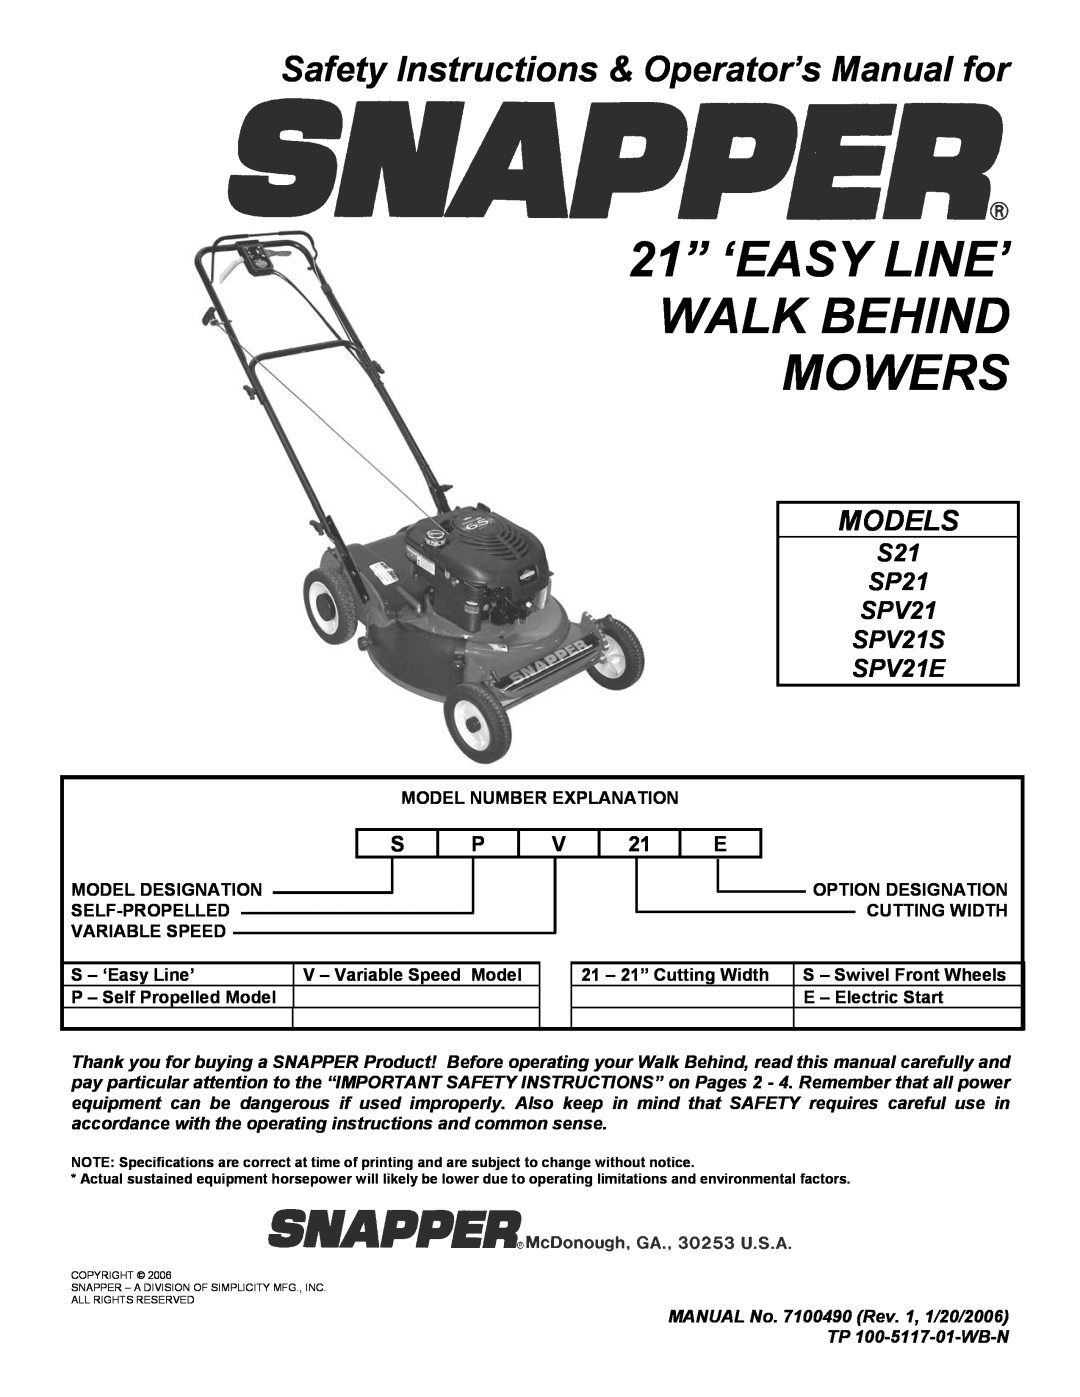 Snapper S21, SP21, SPV21, SPV21S, SPV21E important safety instructions 21” ‘EASY LINE’ WALK BEHIND MOWERS, Models 